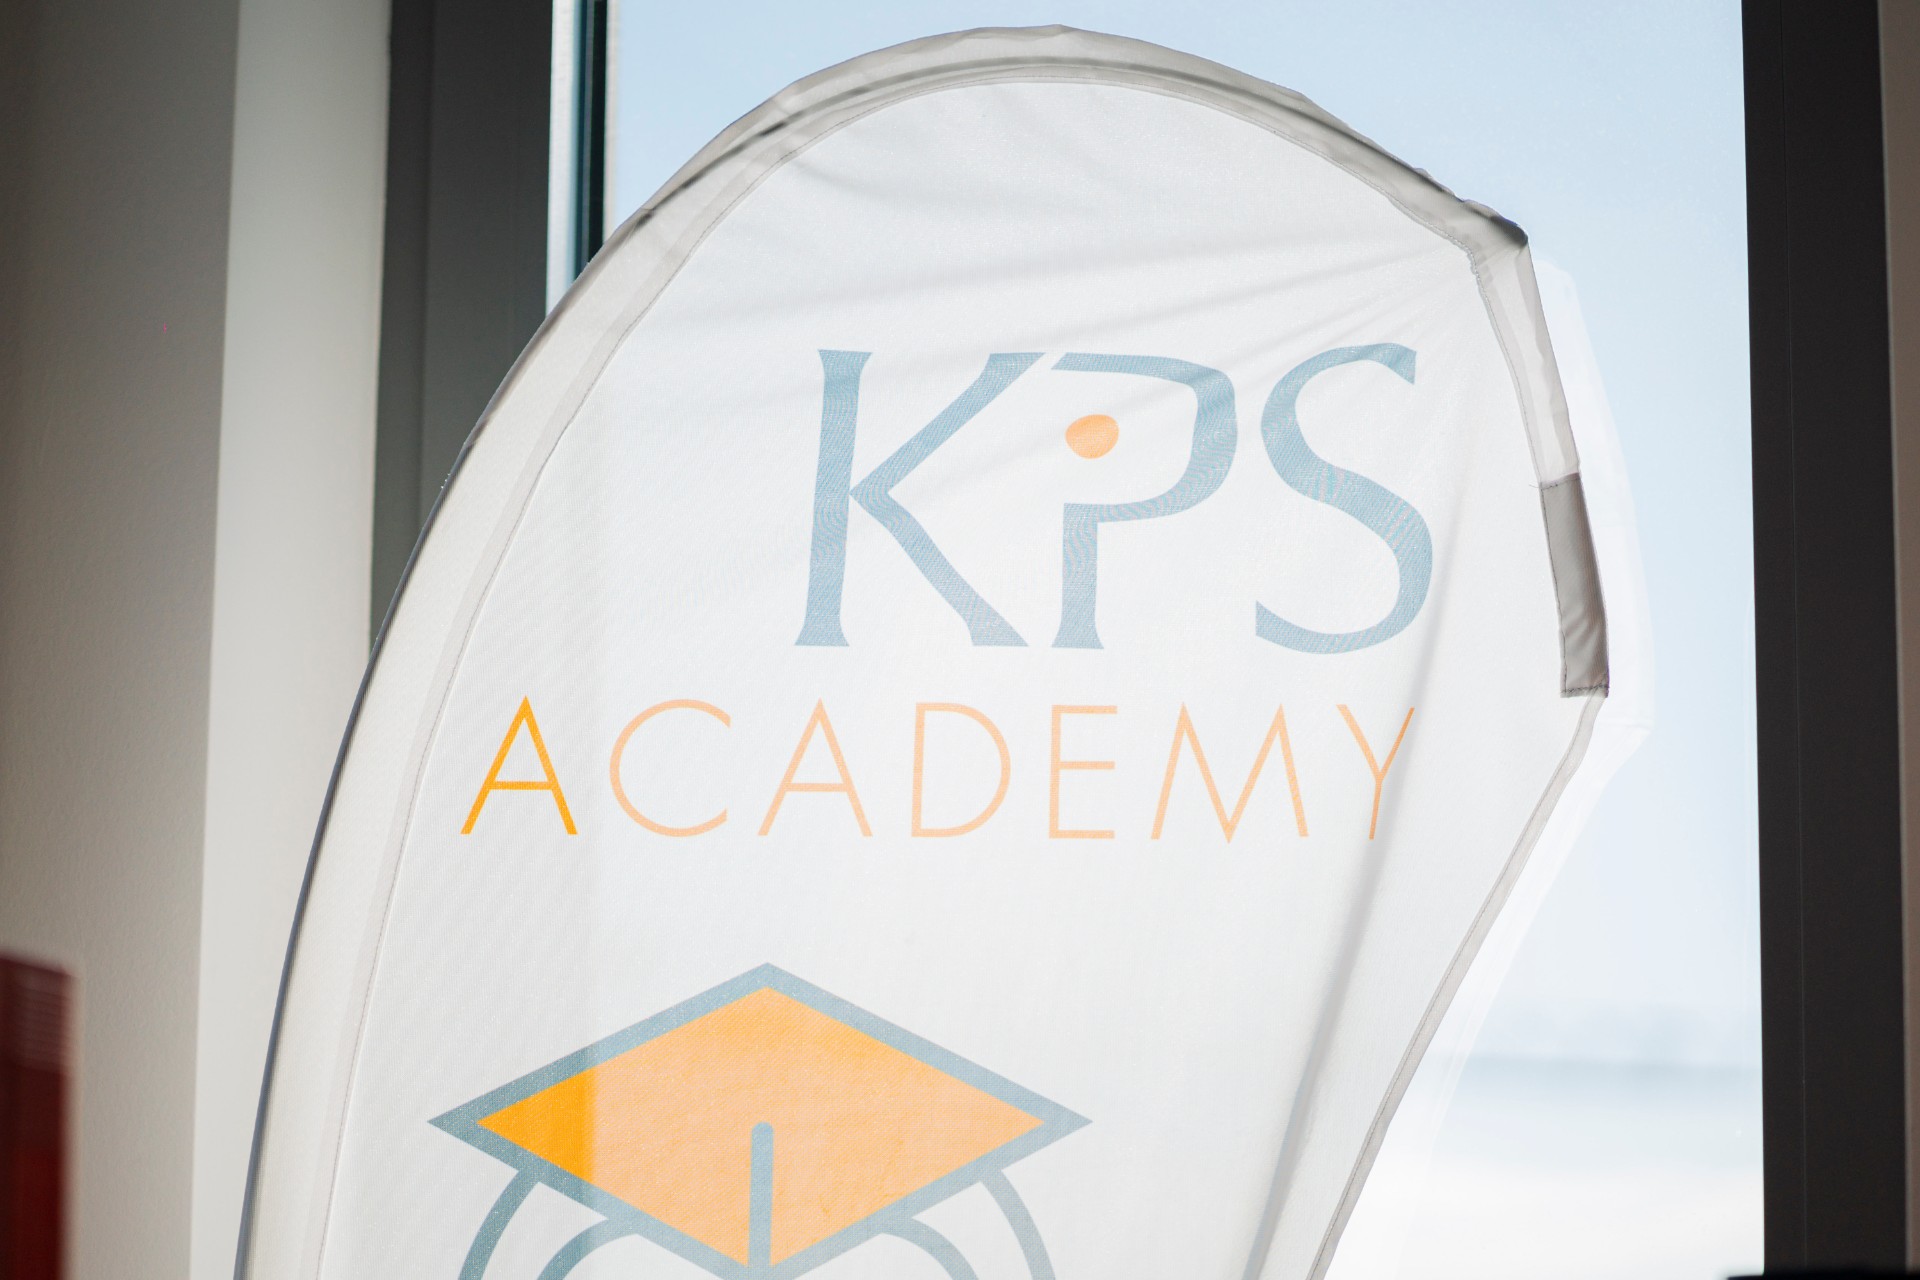 KPS Academy